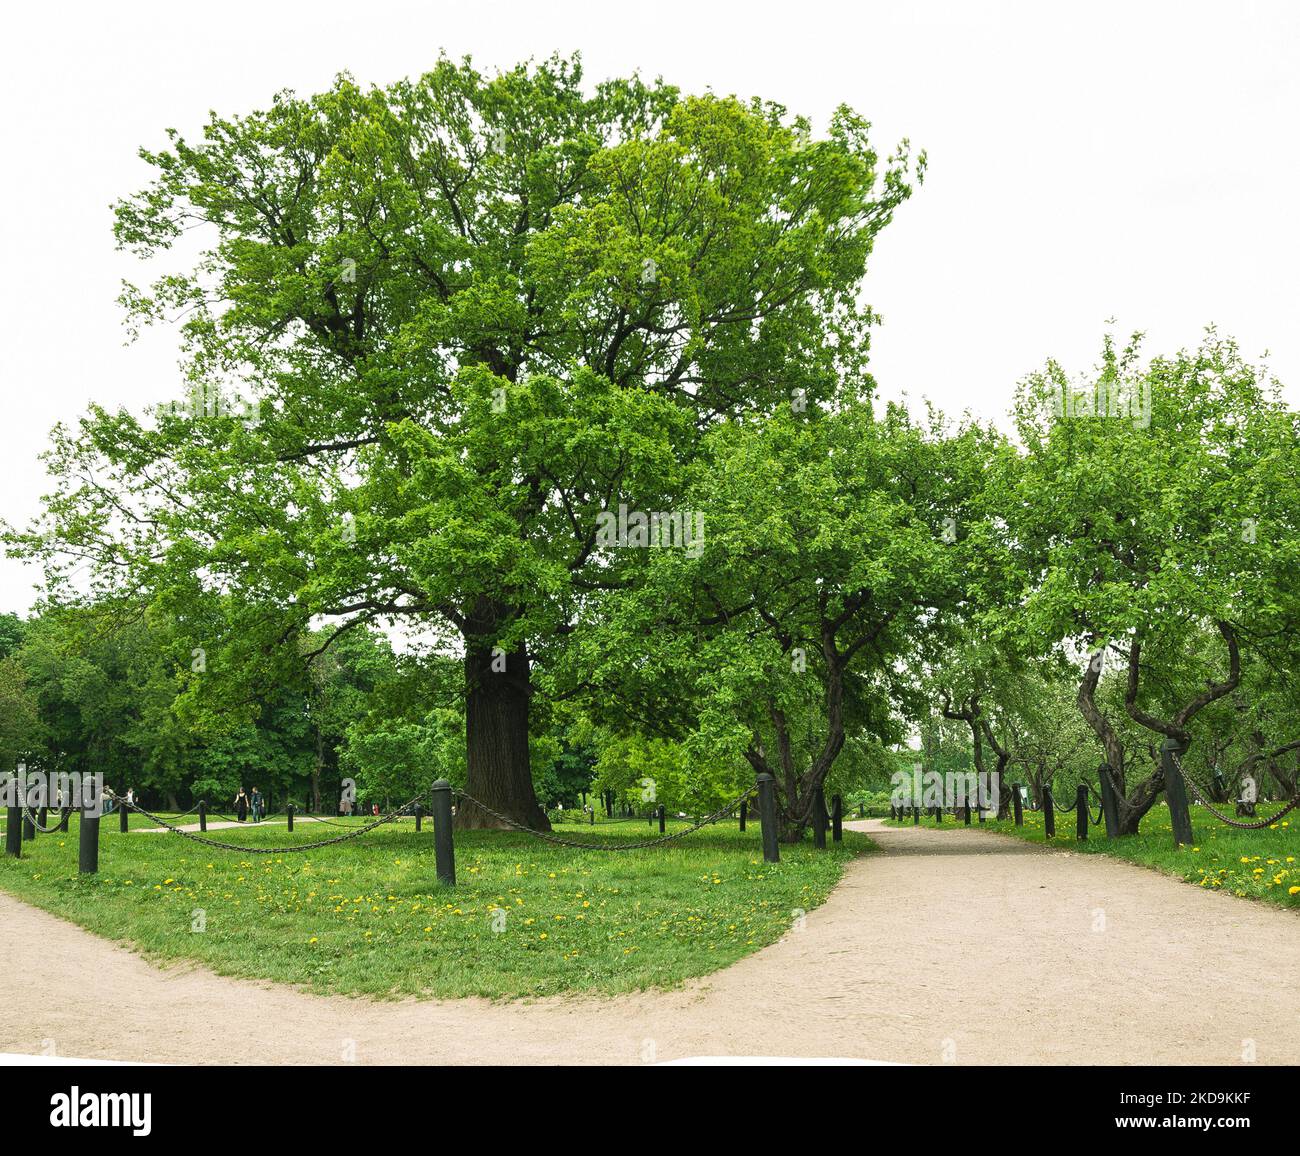 Oak tree in urban parkland Stock Photo